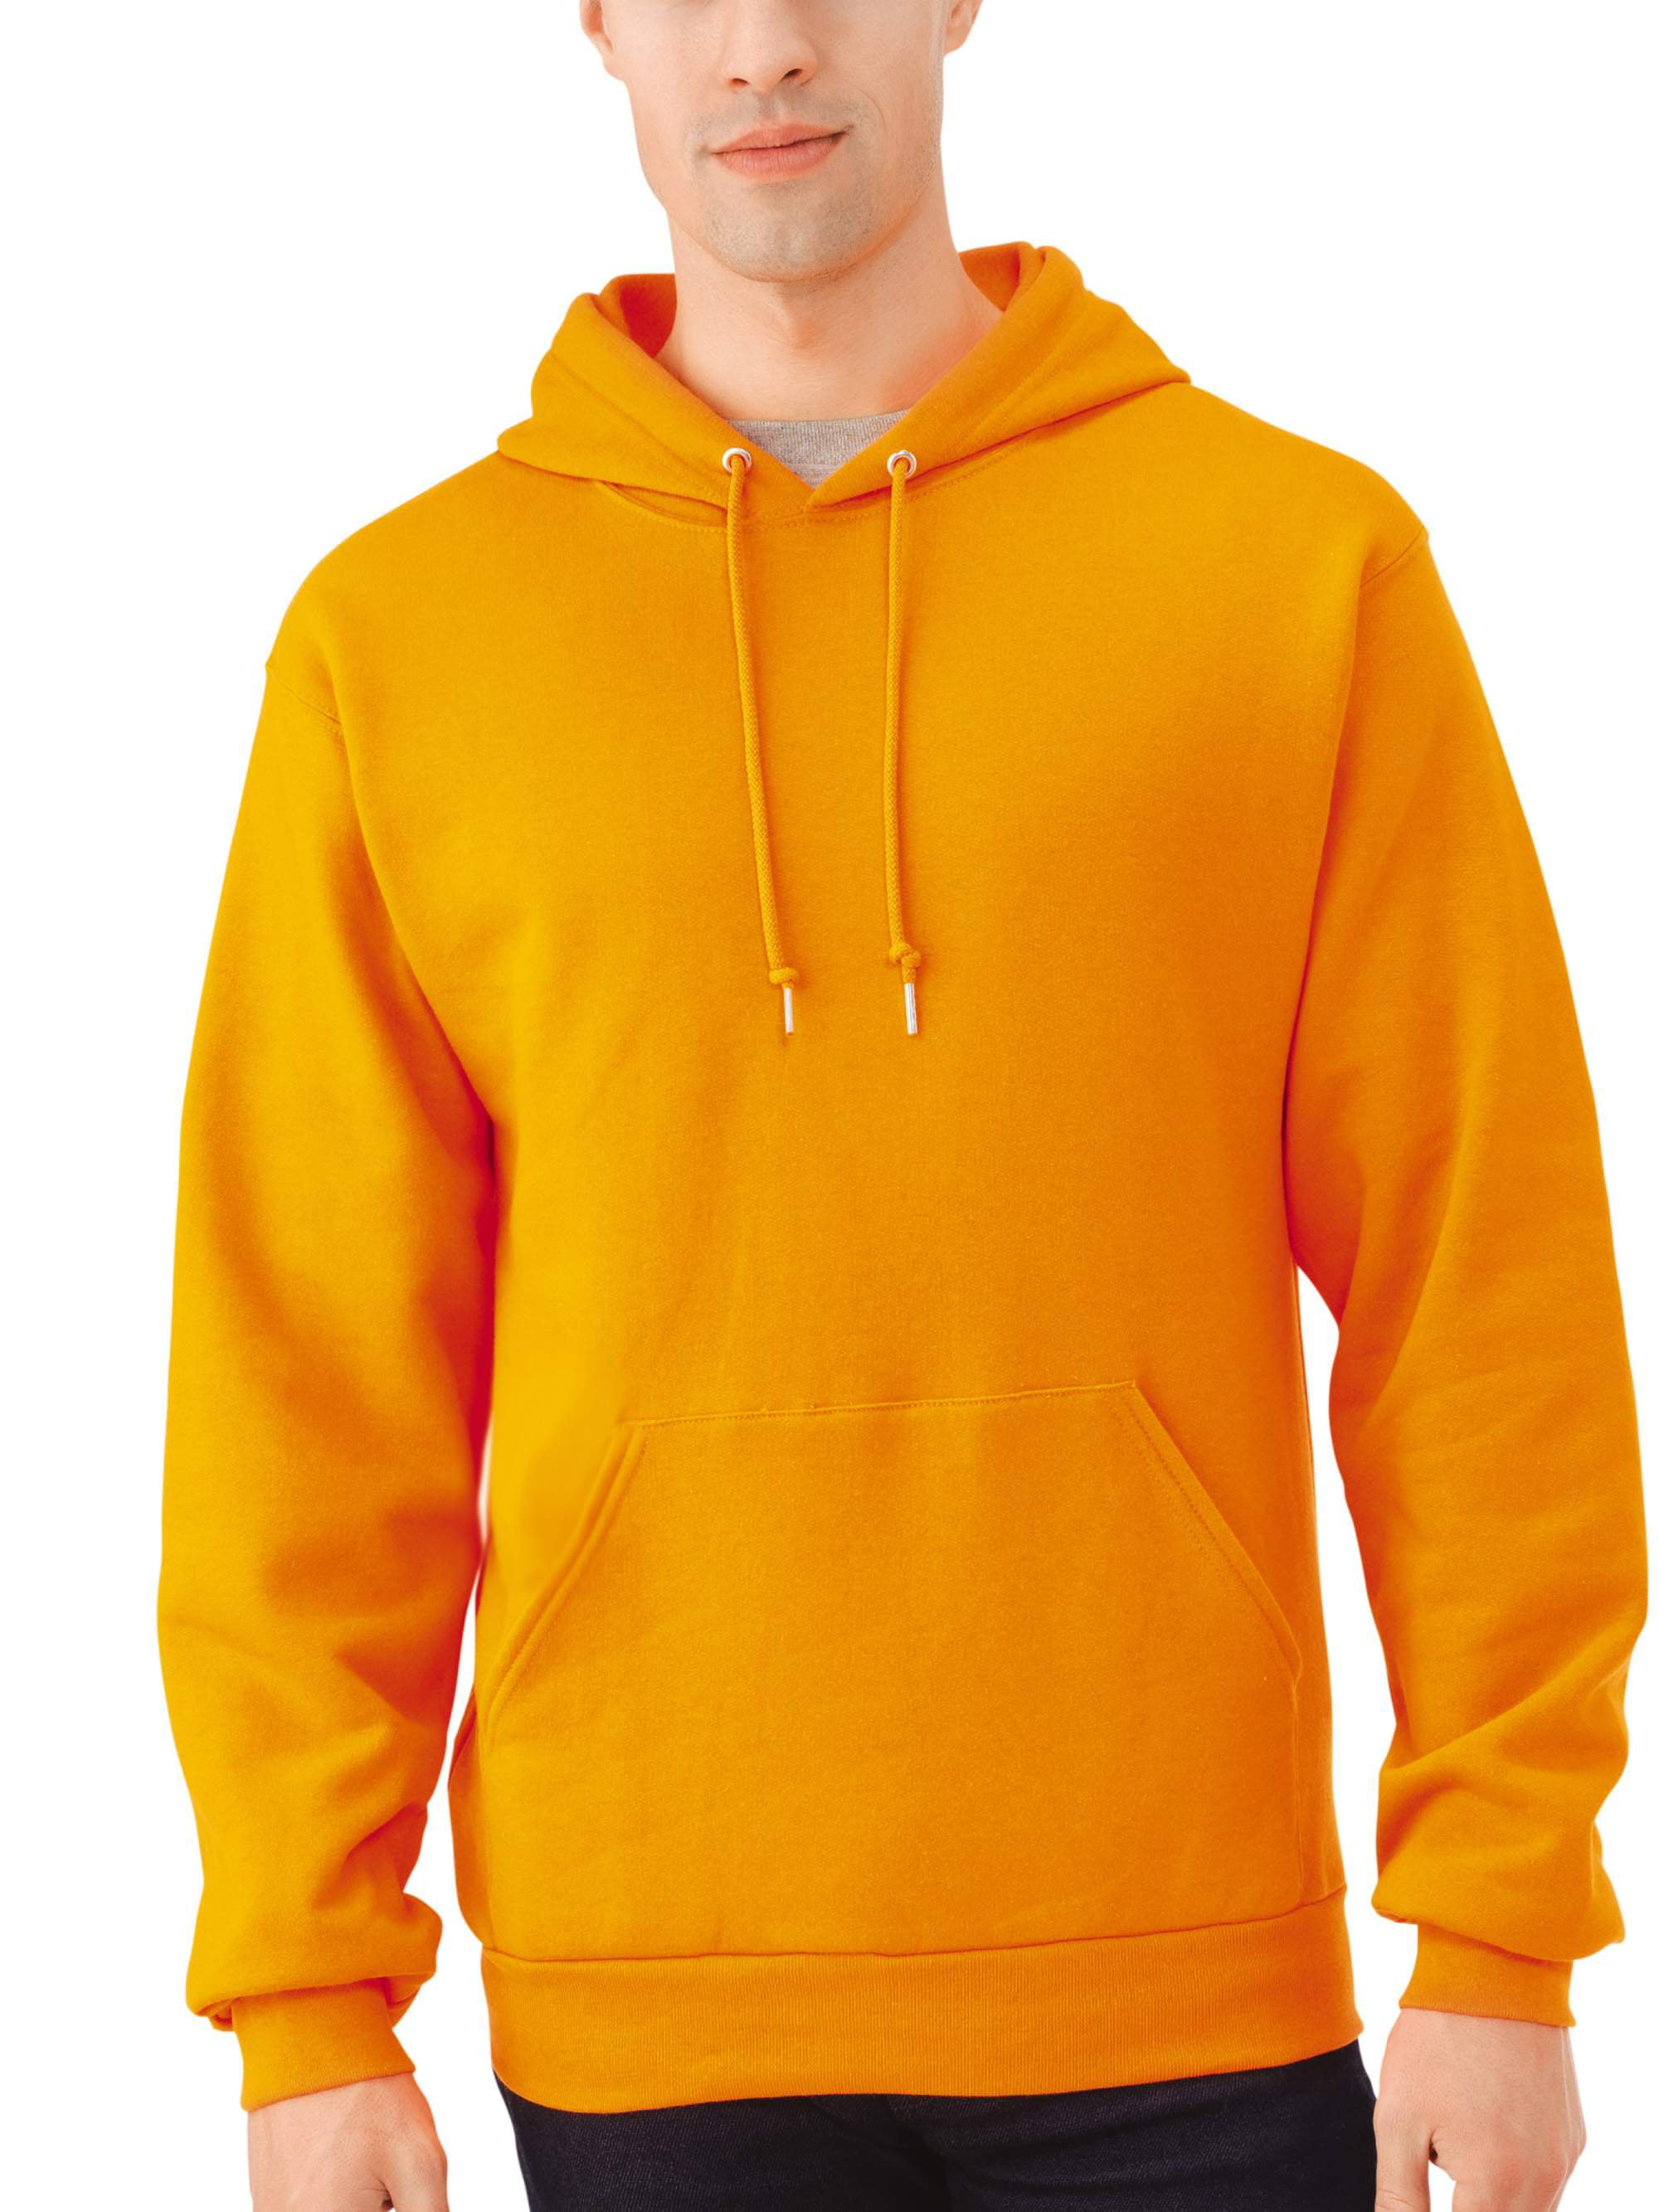 mens yellow hoodie sweatshirt